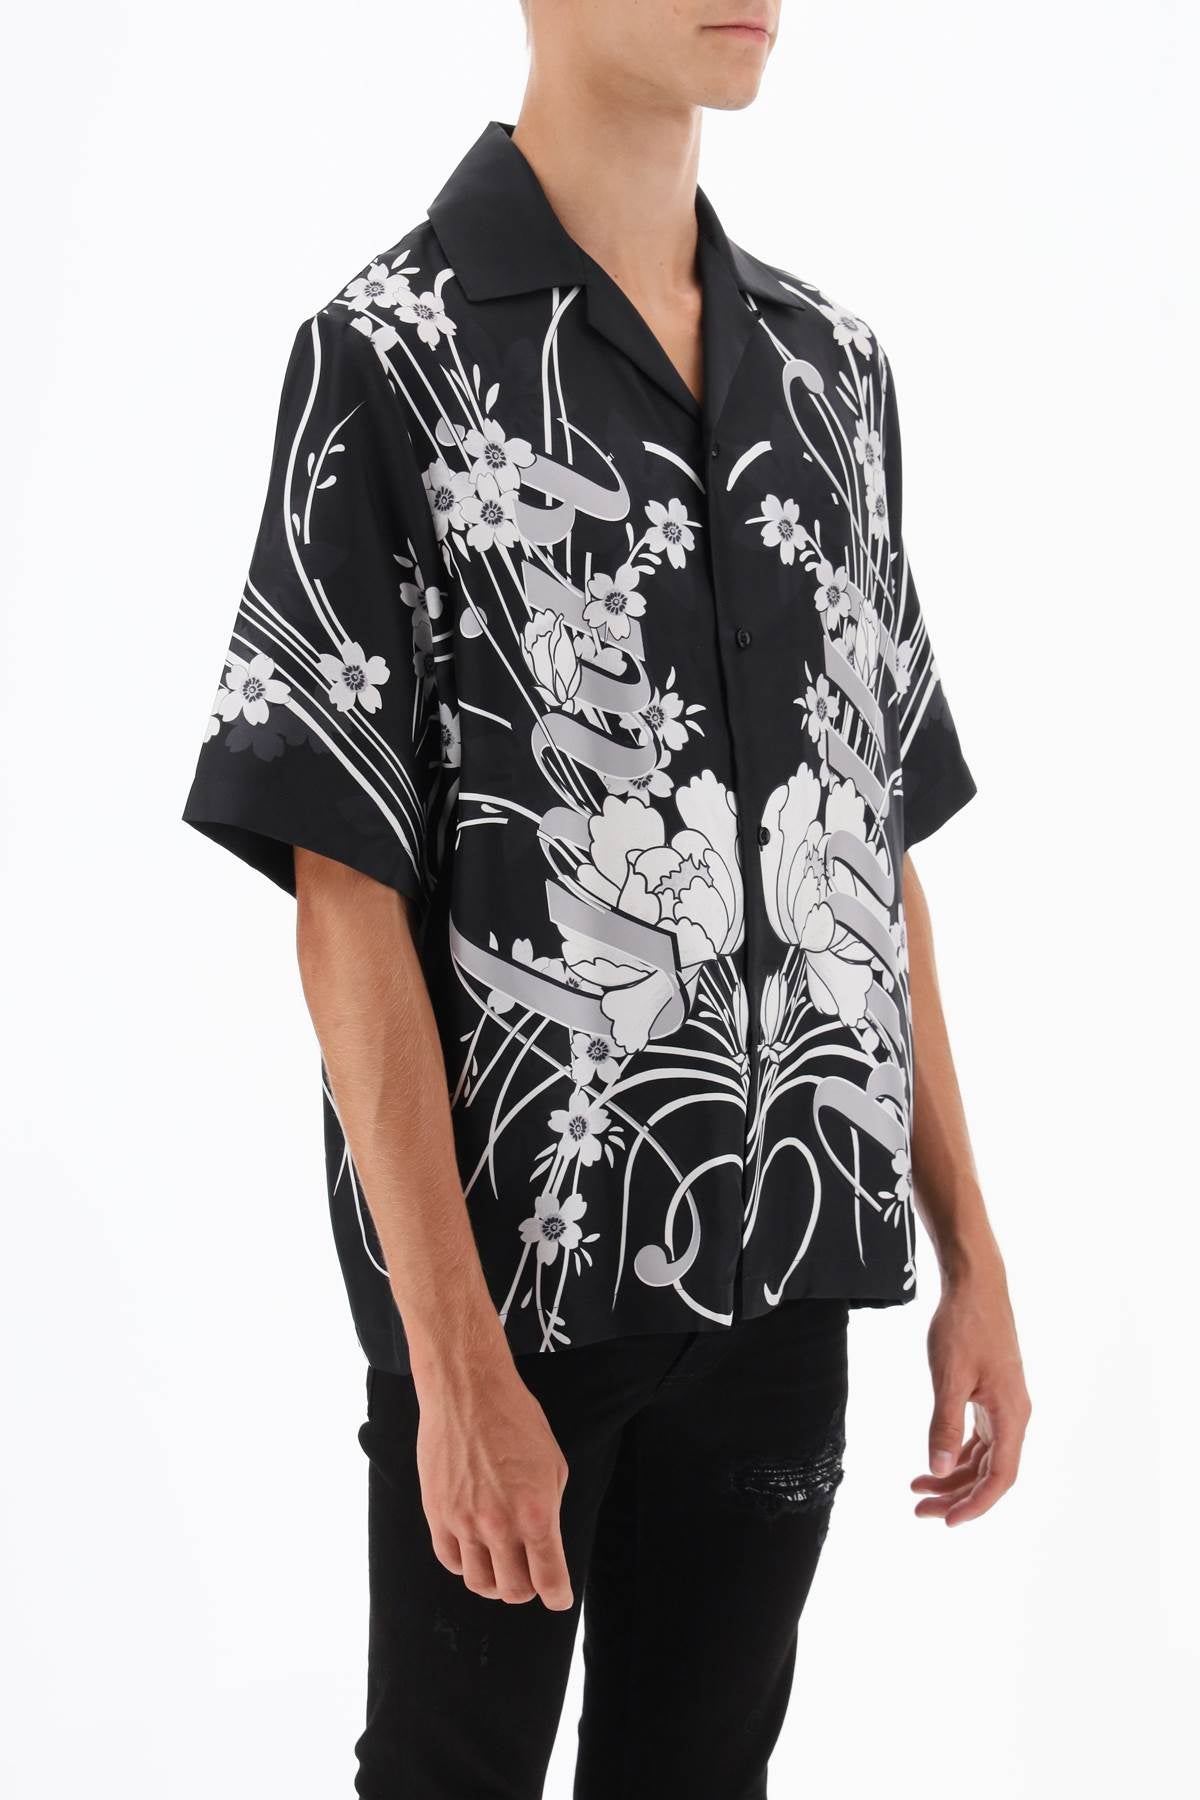 Amiri Amiri bowling shirt with floral motif